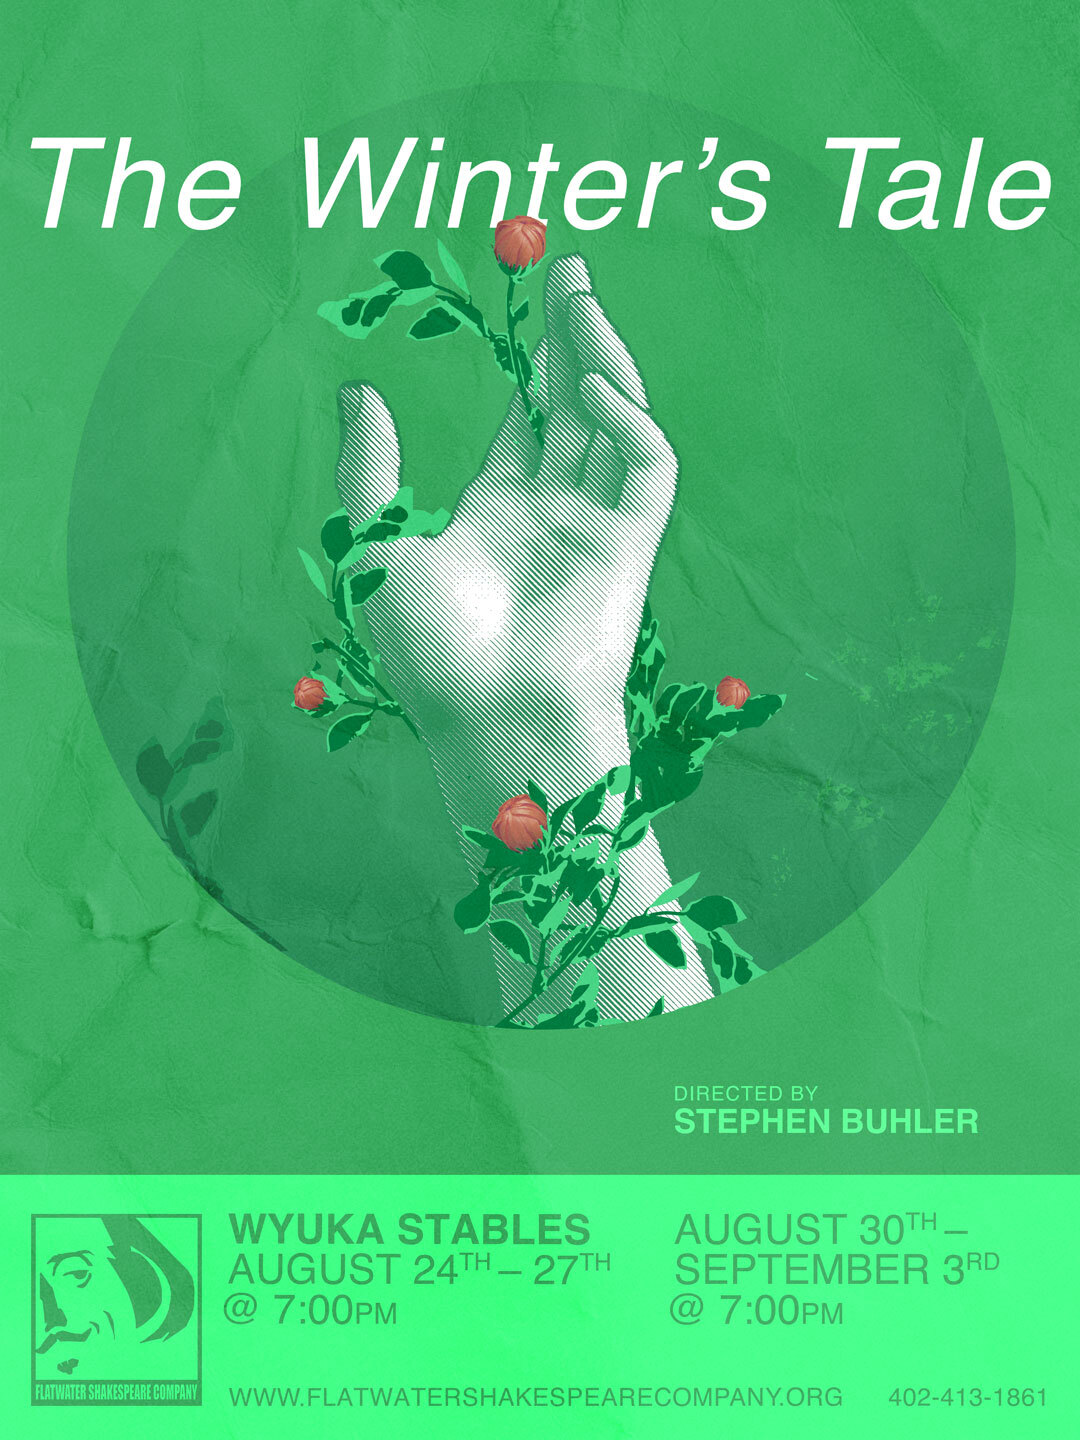 9/3 STU - STUDENT: Sun. September 3, 2023 | 7:00 p.m. - 10:00 p.m. CST | Wyuka Stables (The Winter's Tale)